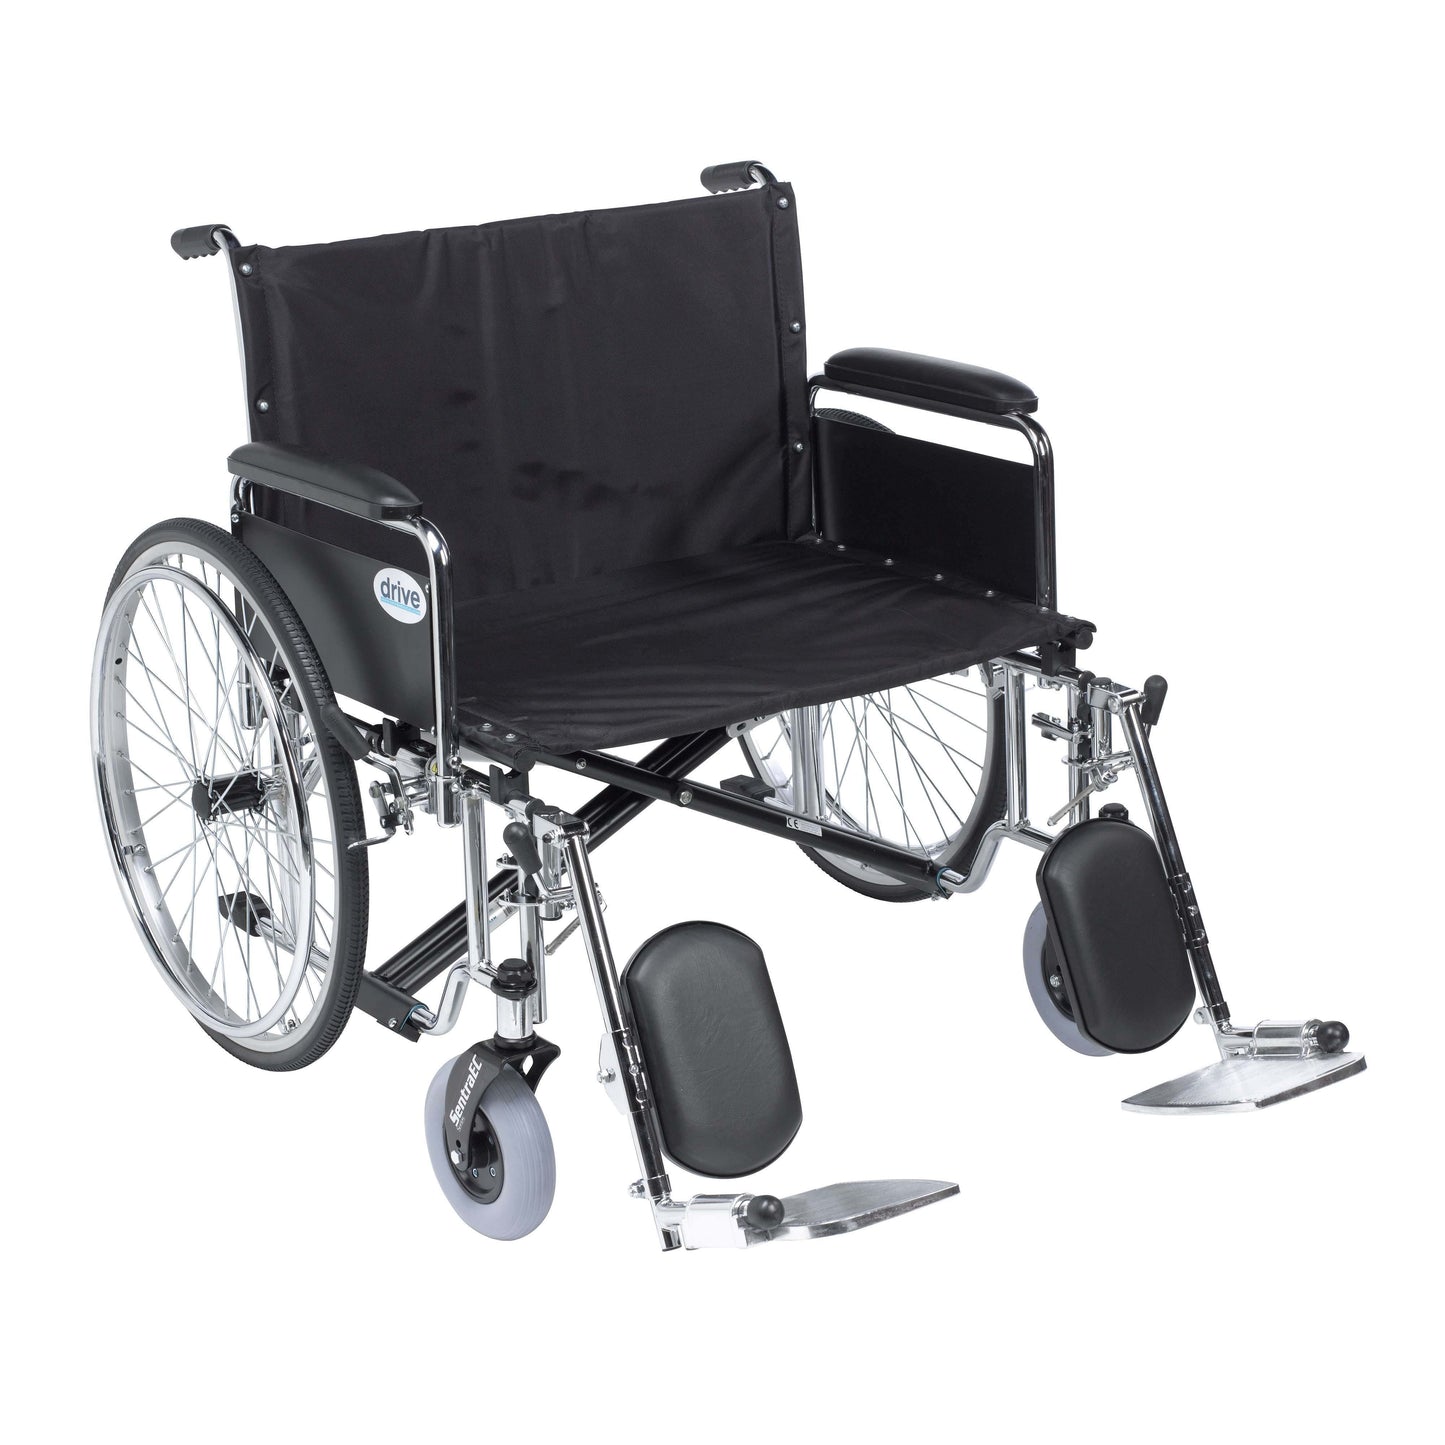 Drive std28ecdfa-elr Sentra EC Heavy Duty Extra Wide Wheelchair, Detachable Full Arms, Elevating Leg Rests, 28" Seat